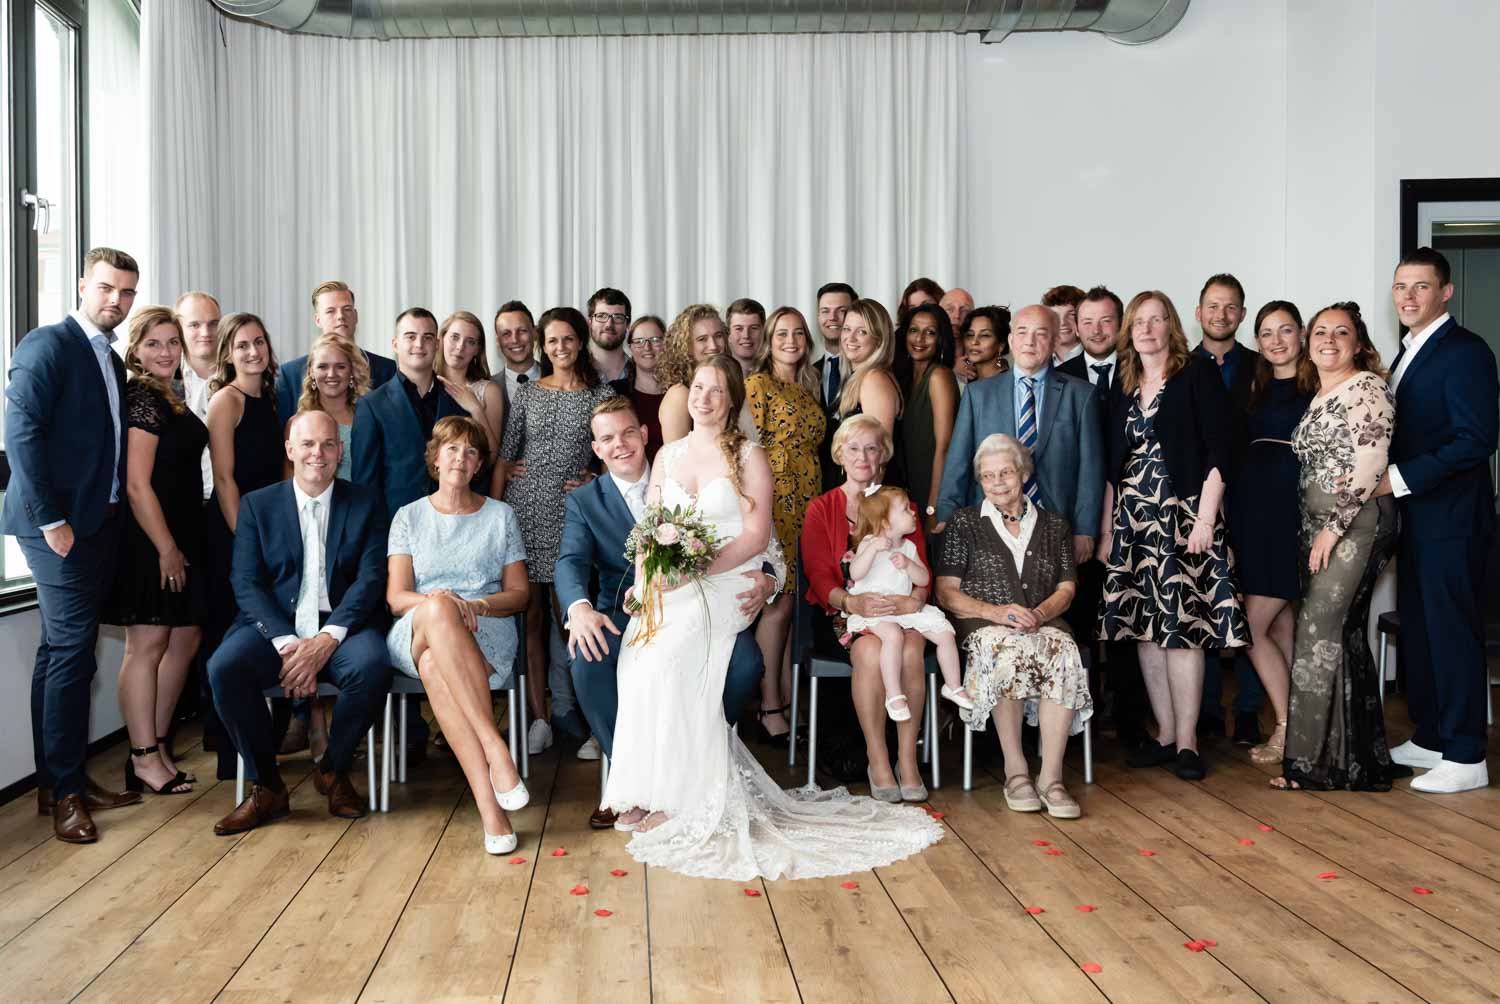 Trouwfotograaf bruidsfotograaf huwelijksfotograaf trouwfotografie huwelijks fotografie Heemstede Noord-Holland Haarlem Zalmiy Paeez